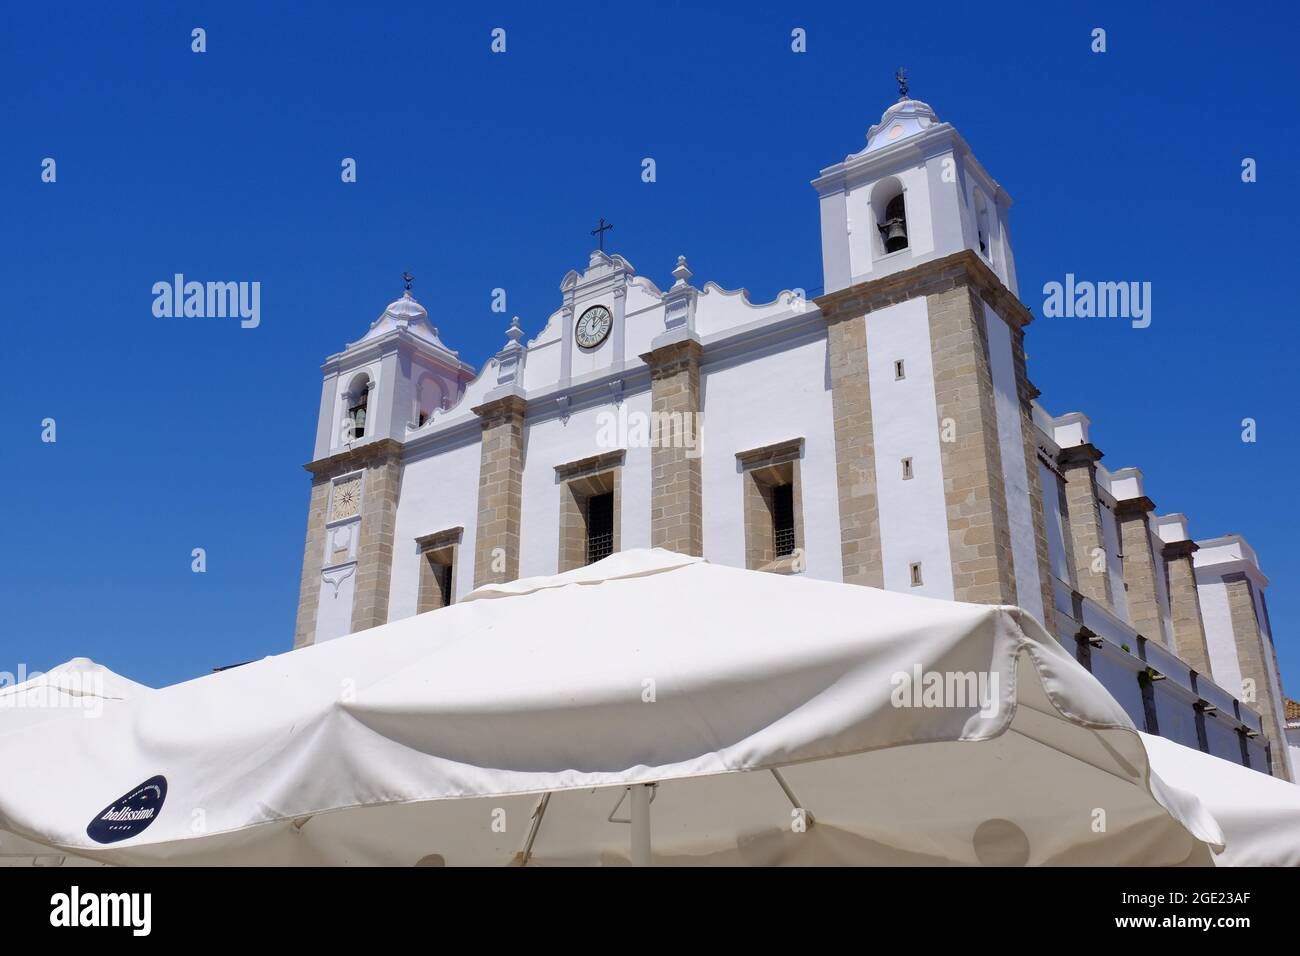 Church of Santo Antao and cafe awnings in Giraldo Square at Evora in Alentejo, Portugal Stock Photo